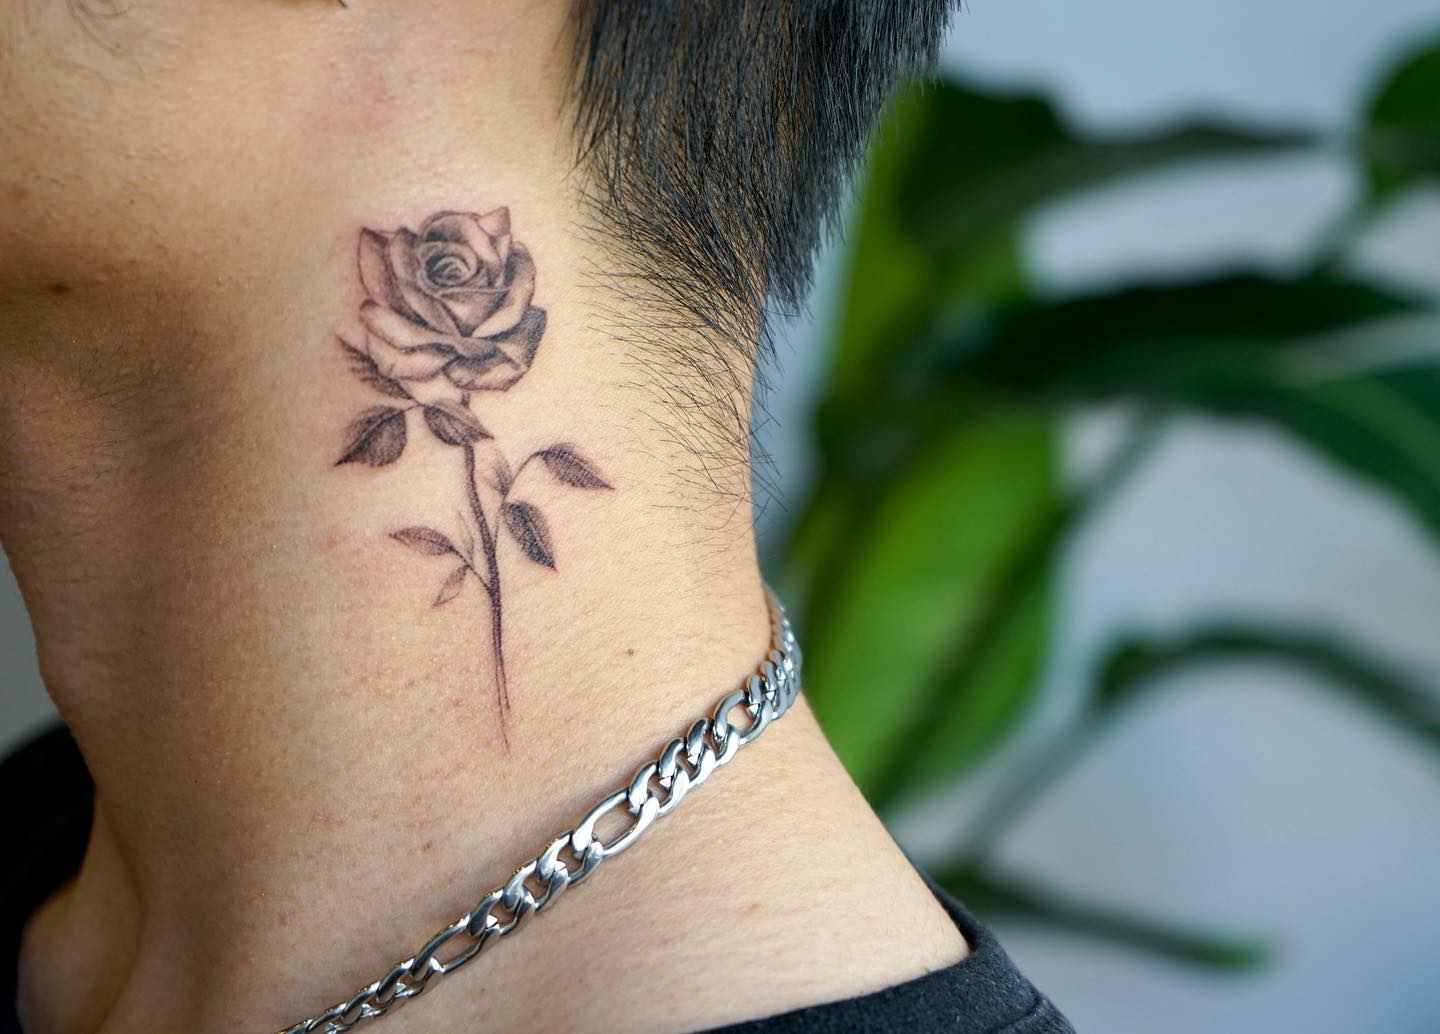 3. Minimalist Rose Tattoo Ideas and Designs - wide 3